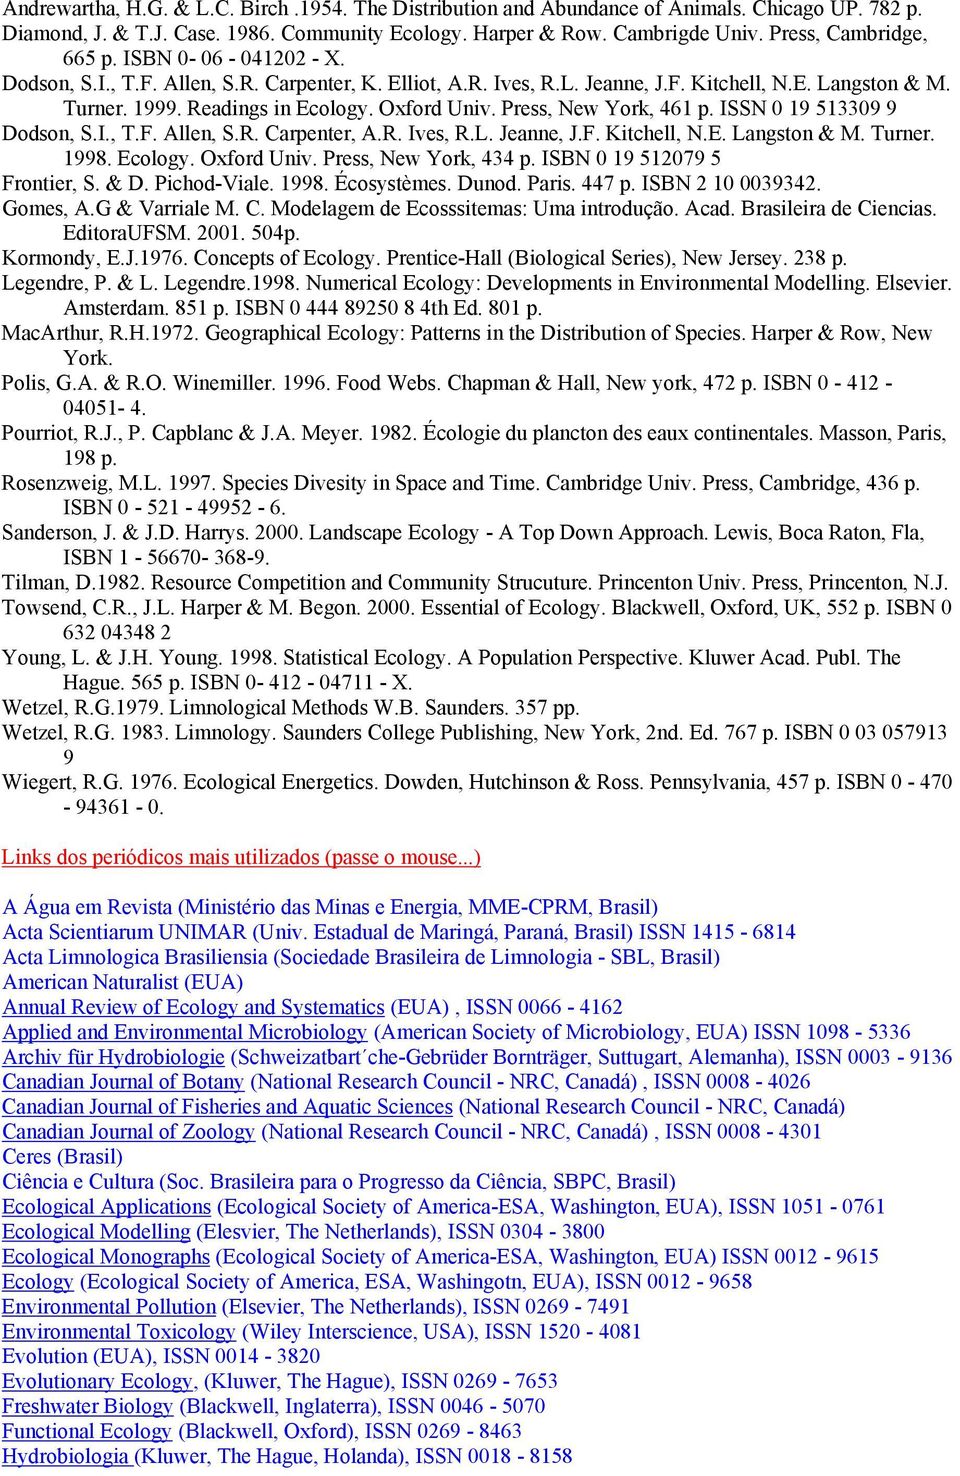 Oxford Univ. Press, New York, 461 p. ISSN 0 19 513309 9 Dodson, S.I., T.F. Allen, S.R. Carpenter, A.R. Ives, R.L. Jeanne, J.F. Kitchell, N.E. Langston & M. Turner. 1998. Ecology. Oxford Univ.